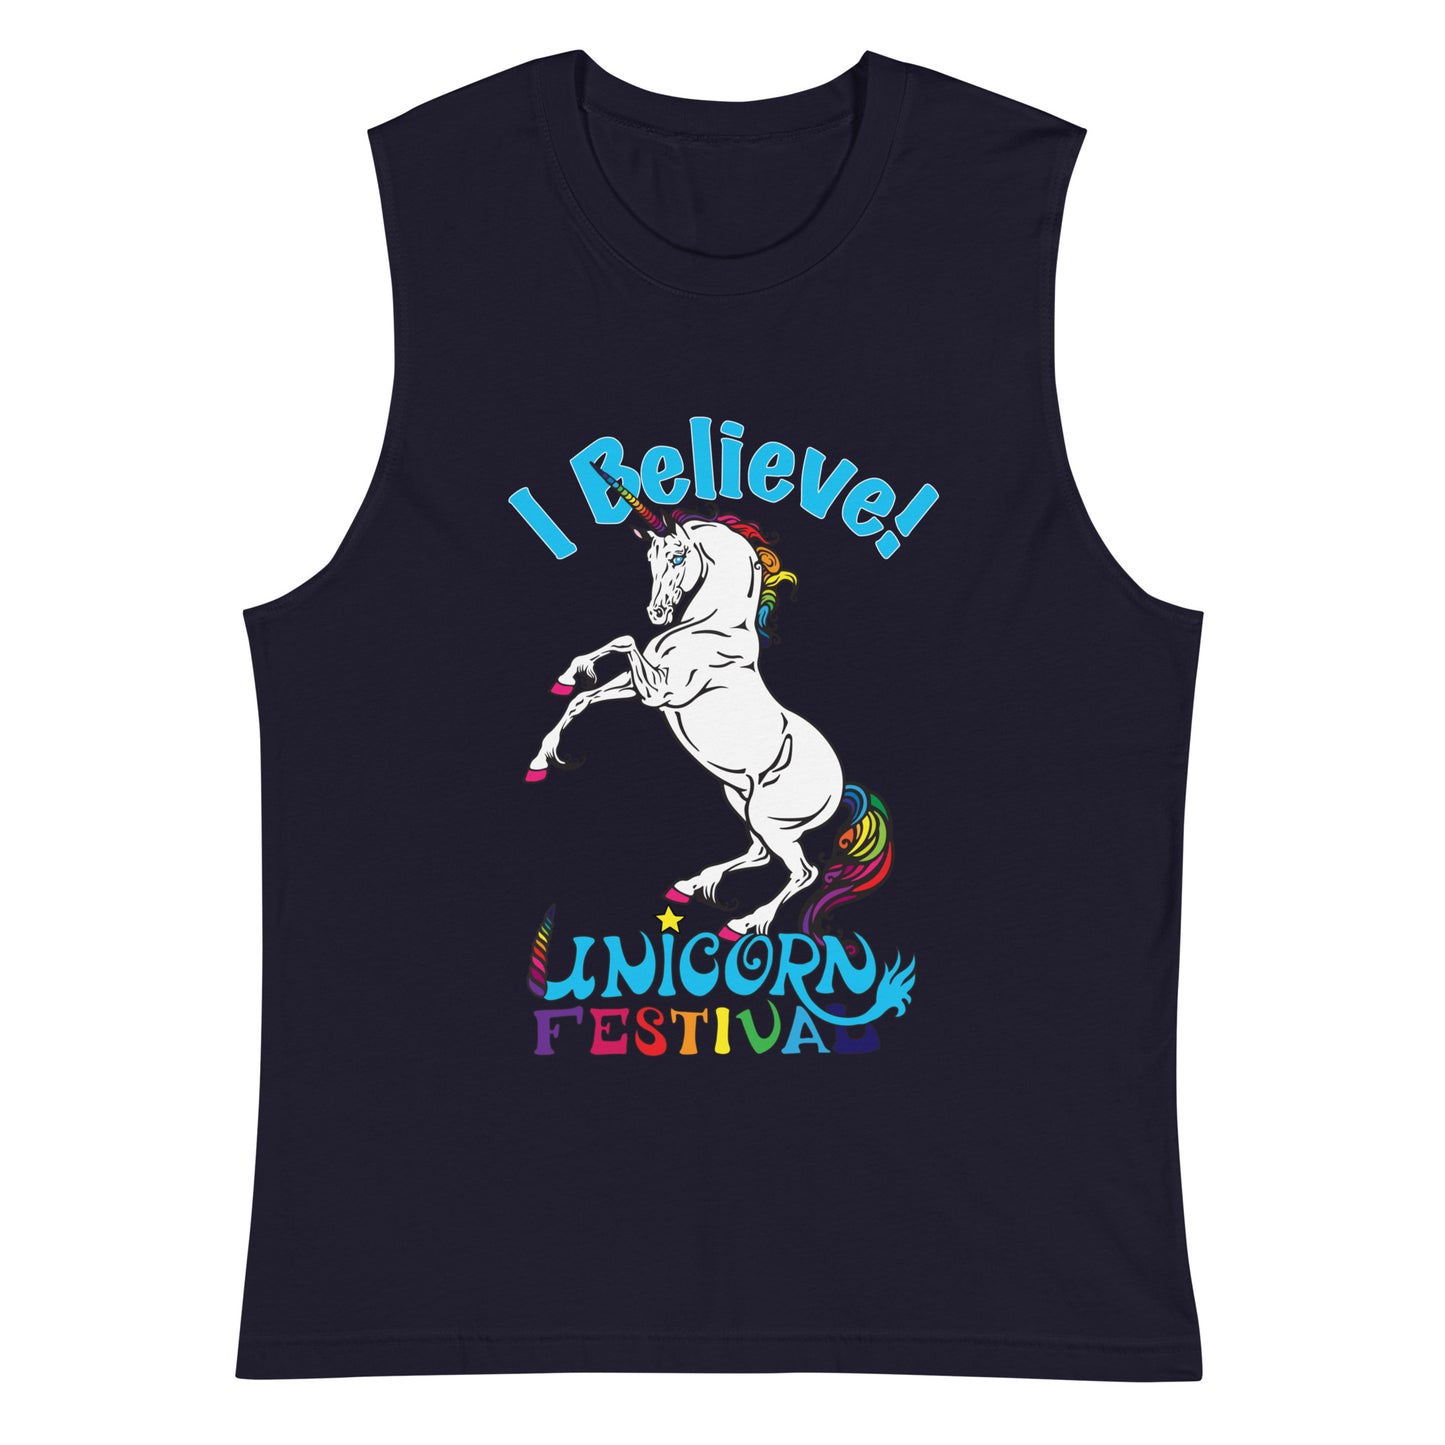 Unicorn Festival Unisex Muscle Shirt